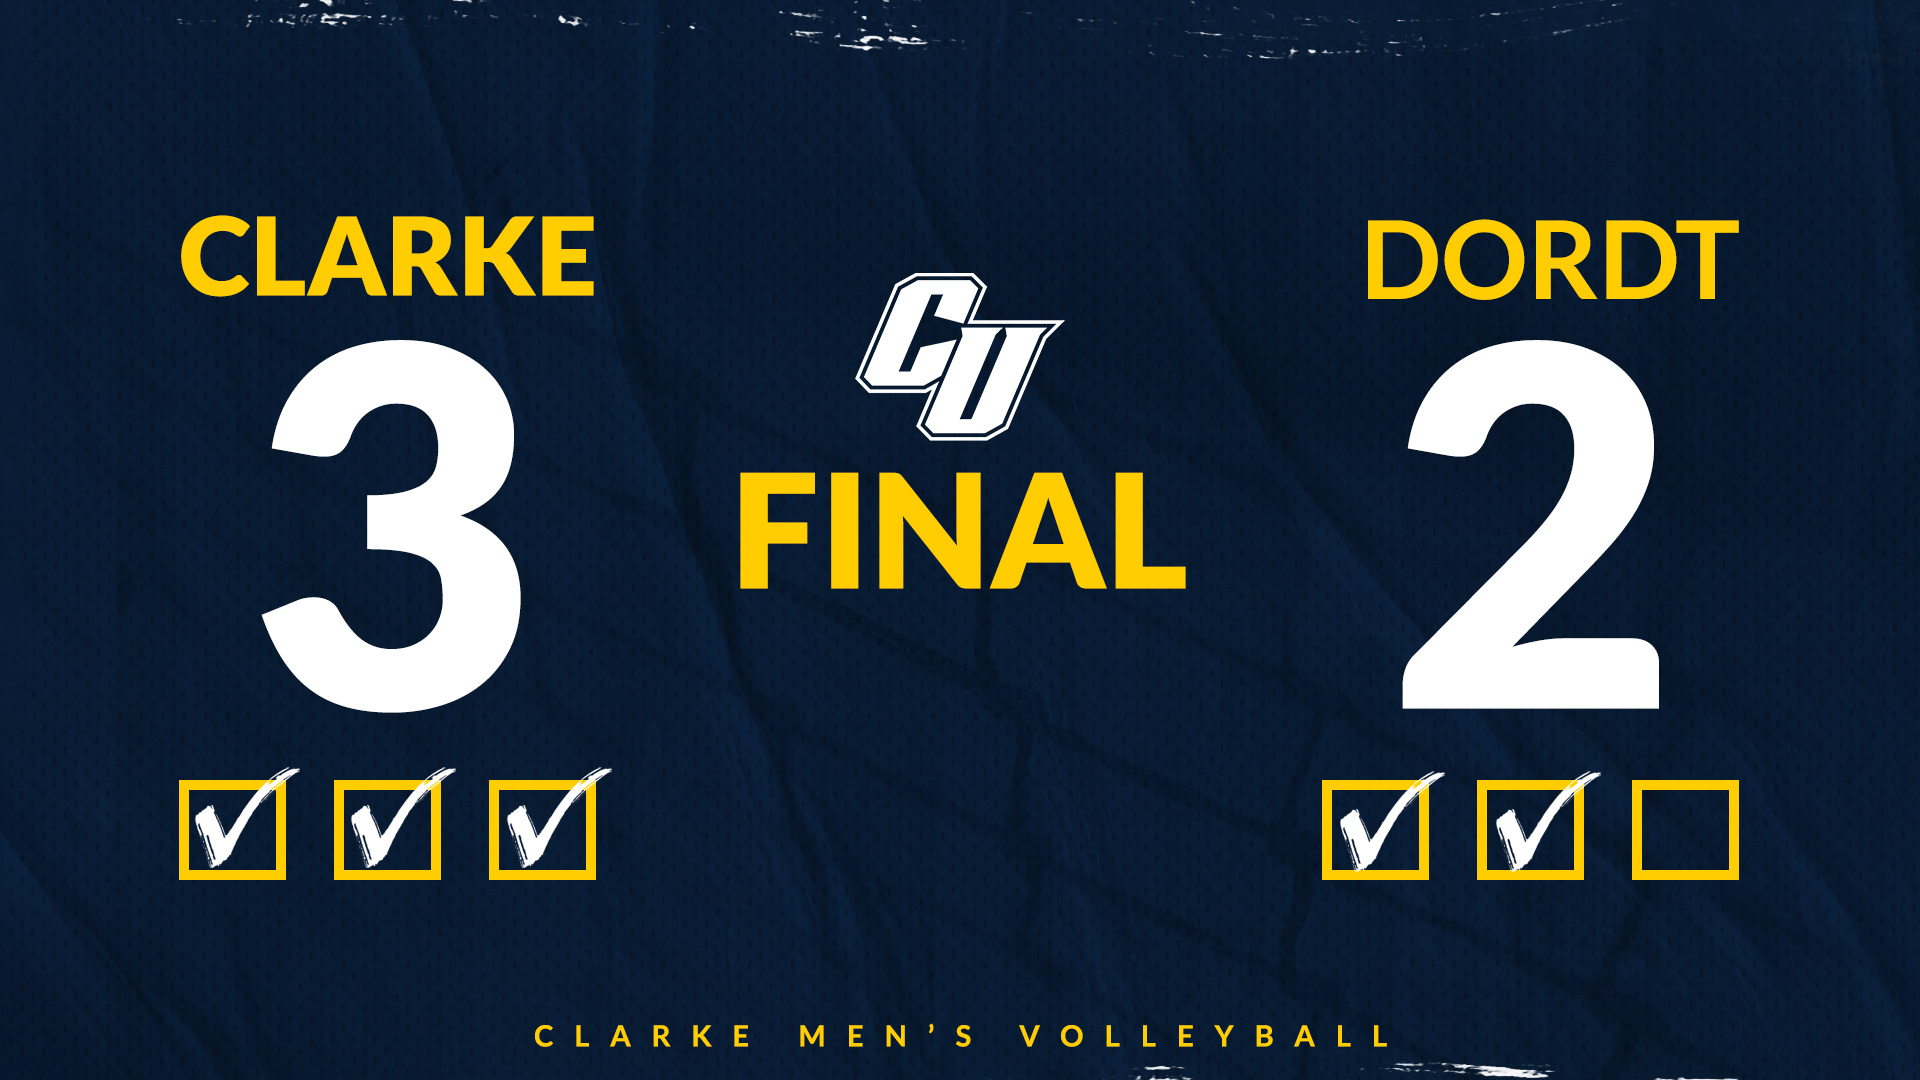 Clarke 3
Dordt 2
Final
Clarke Men's Volleyball